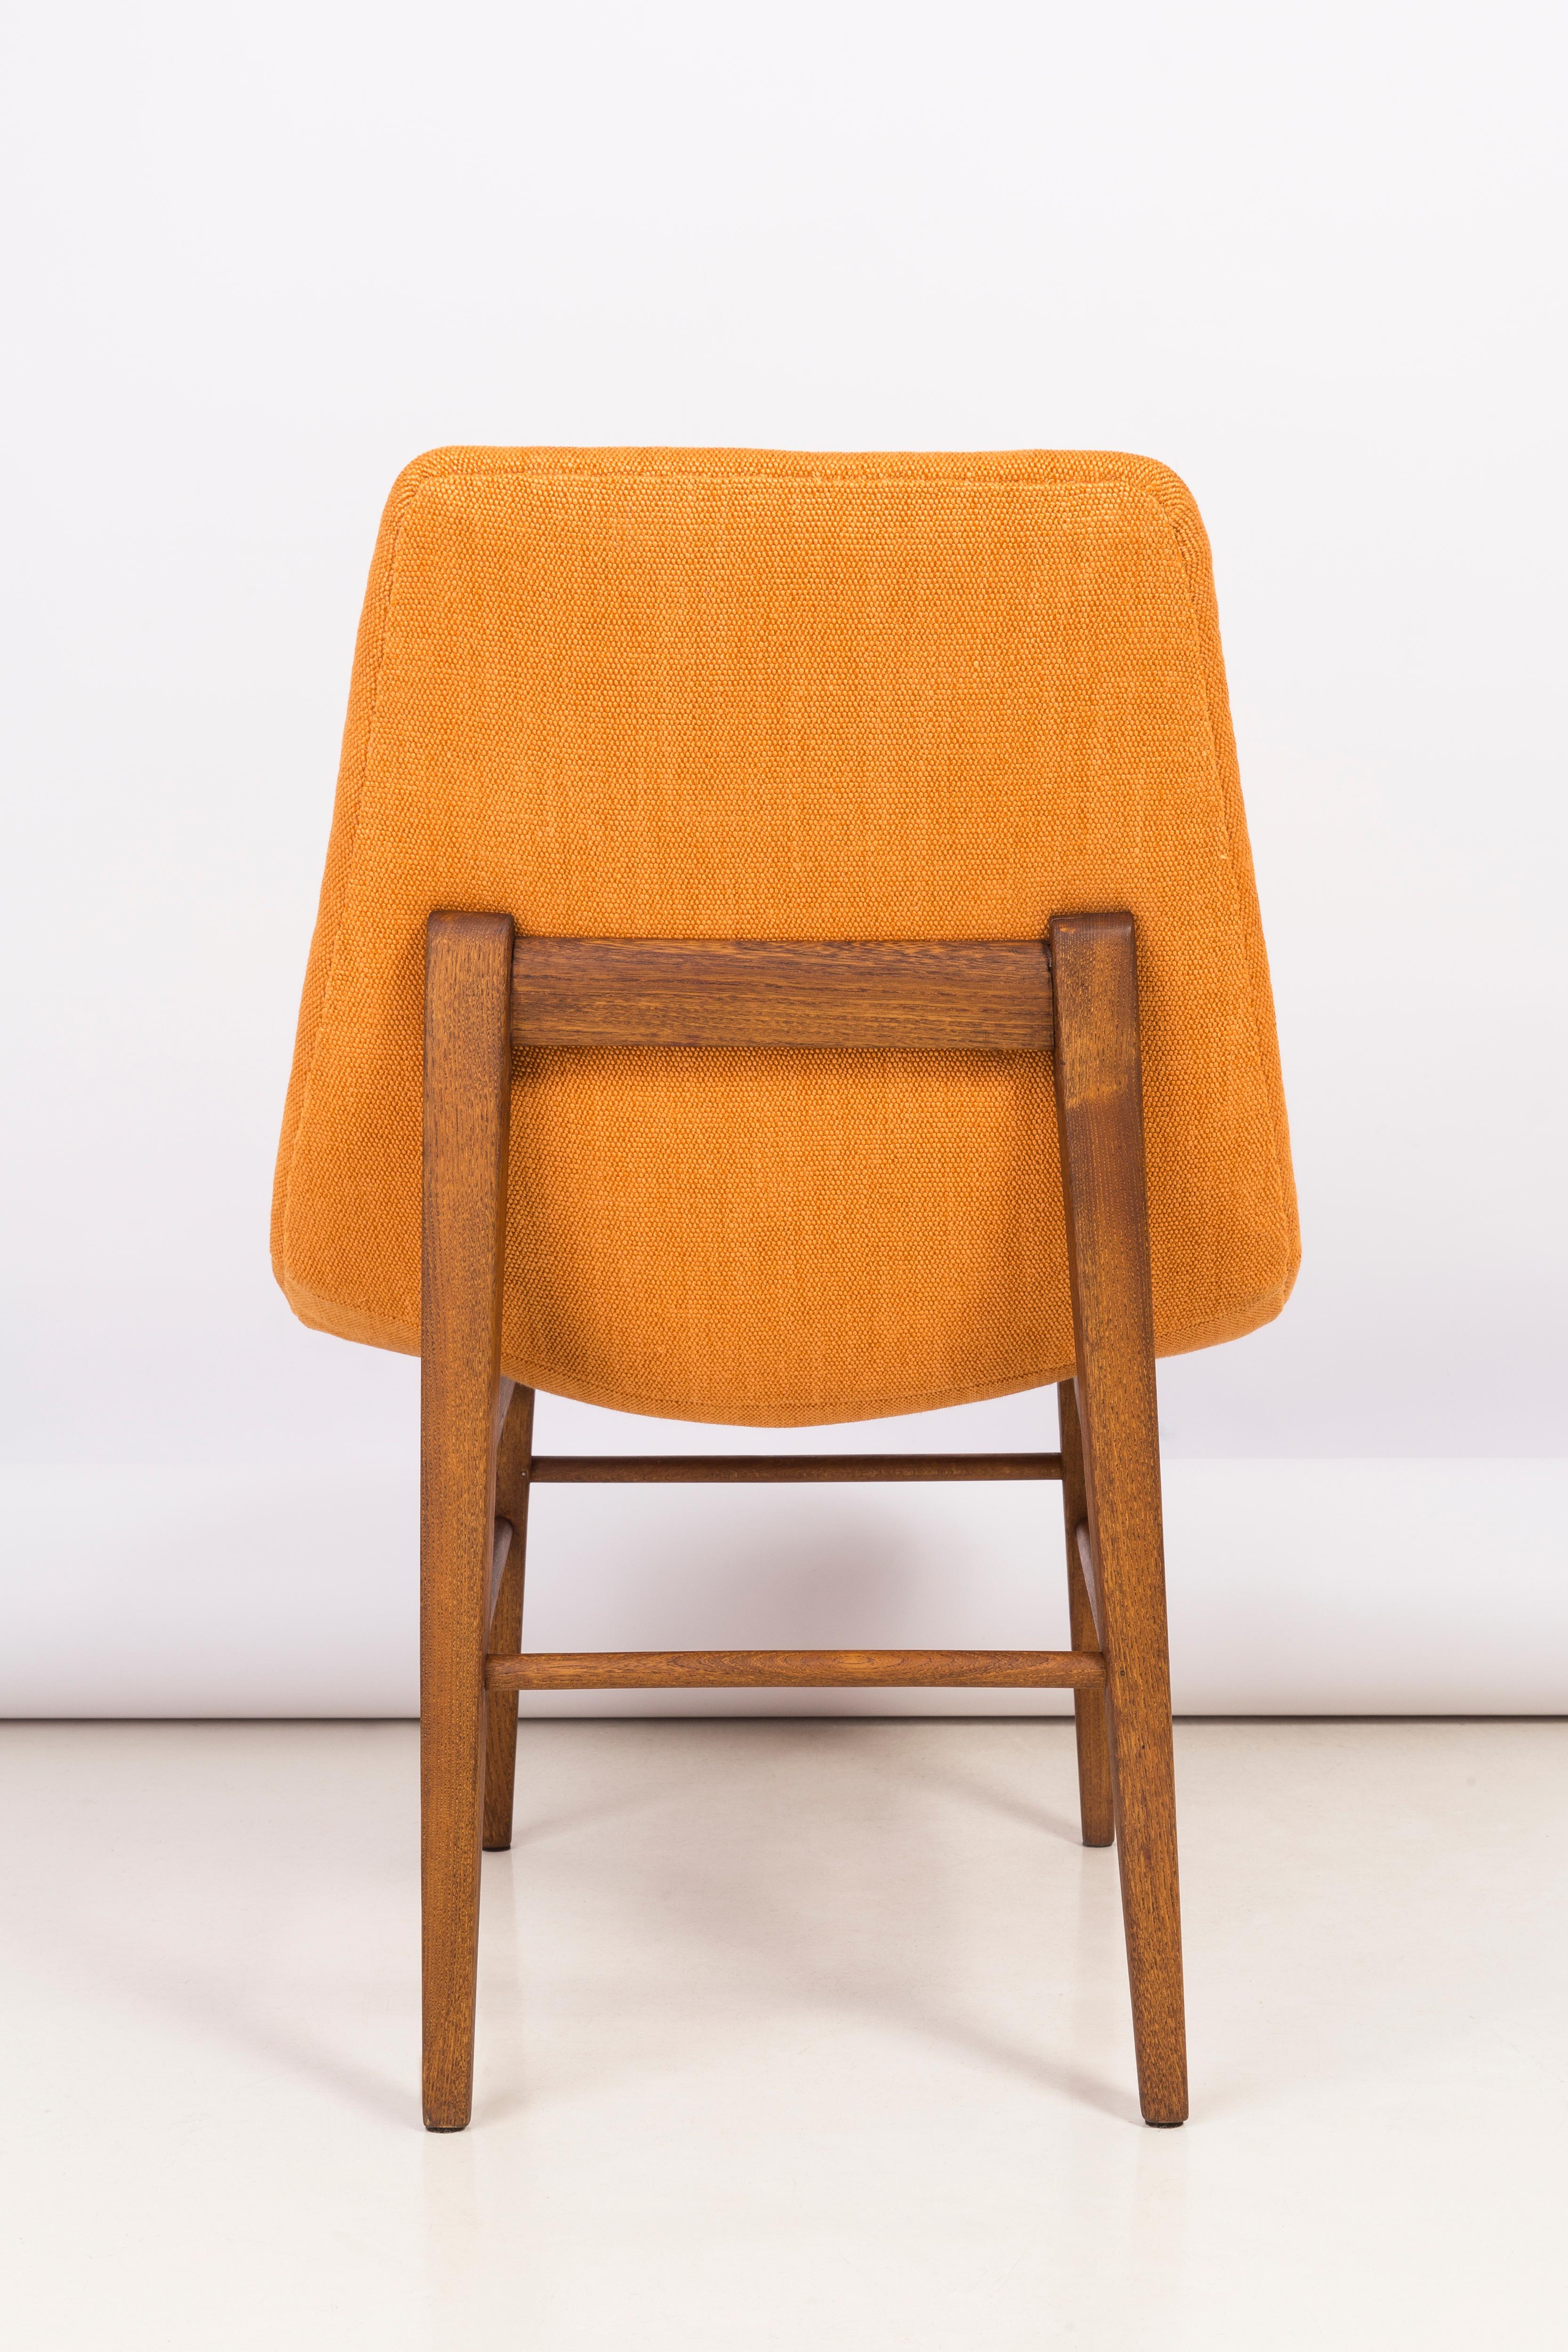 Rare 20th Century Orange Shell Chair, H.Lachert, 1960s For Sale 3